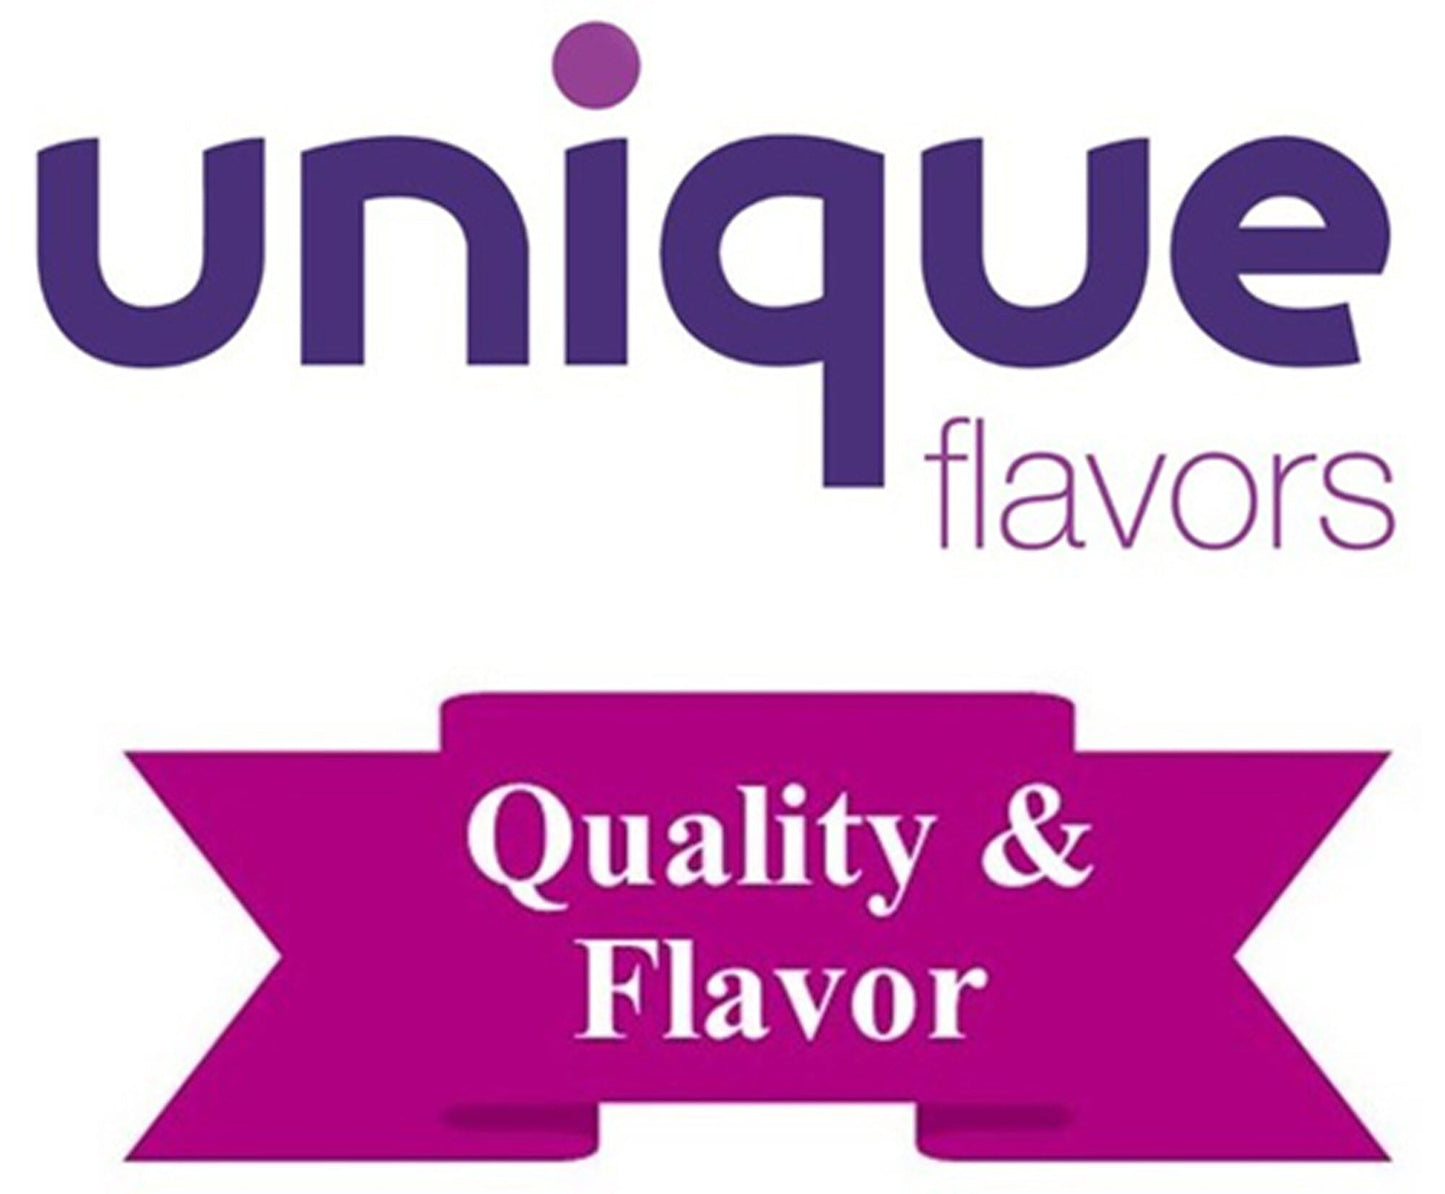 Garlic Powder Fine 2 oz Easy Shaker- Spices Direct Spices Unique Flavors LLC 